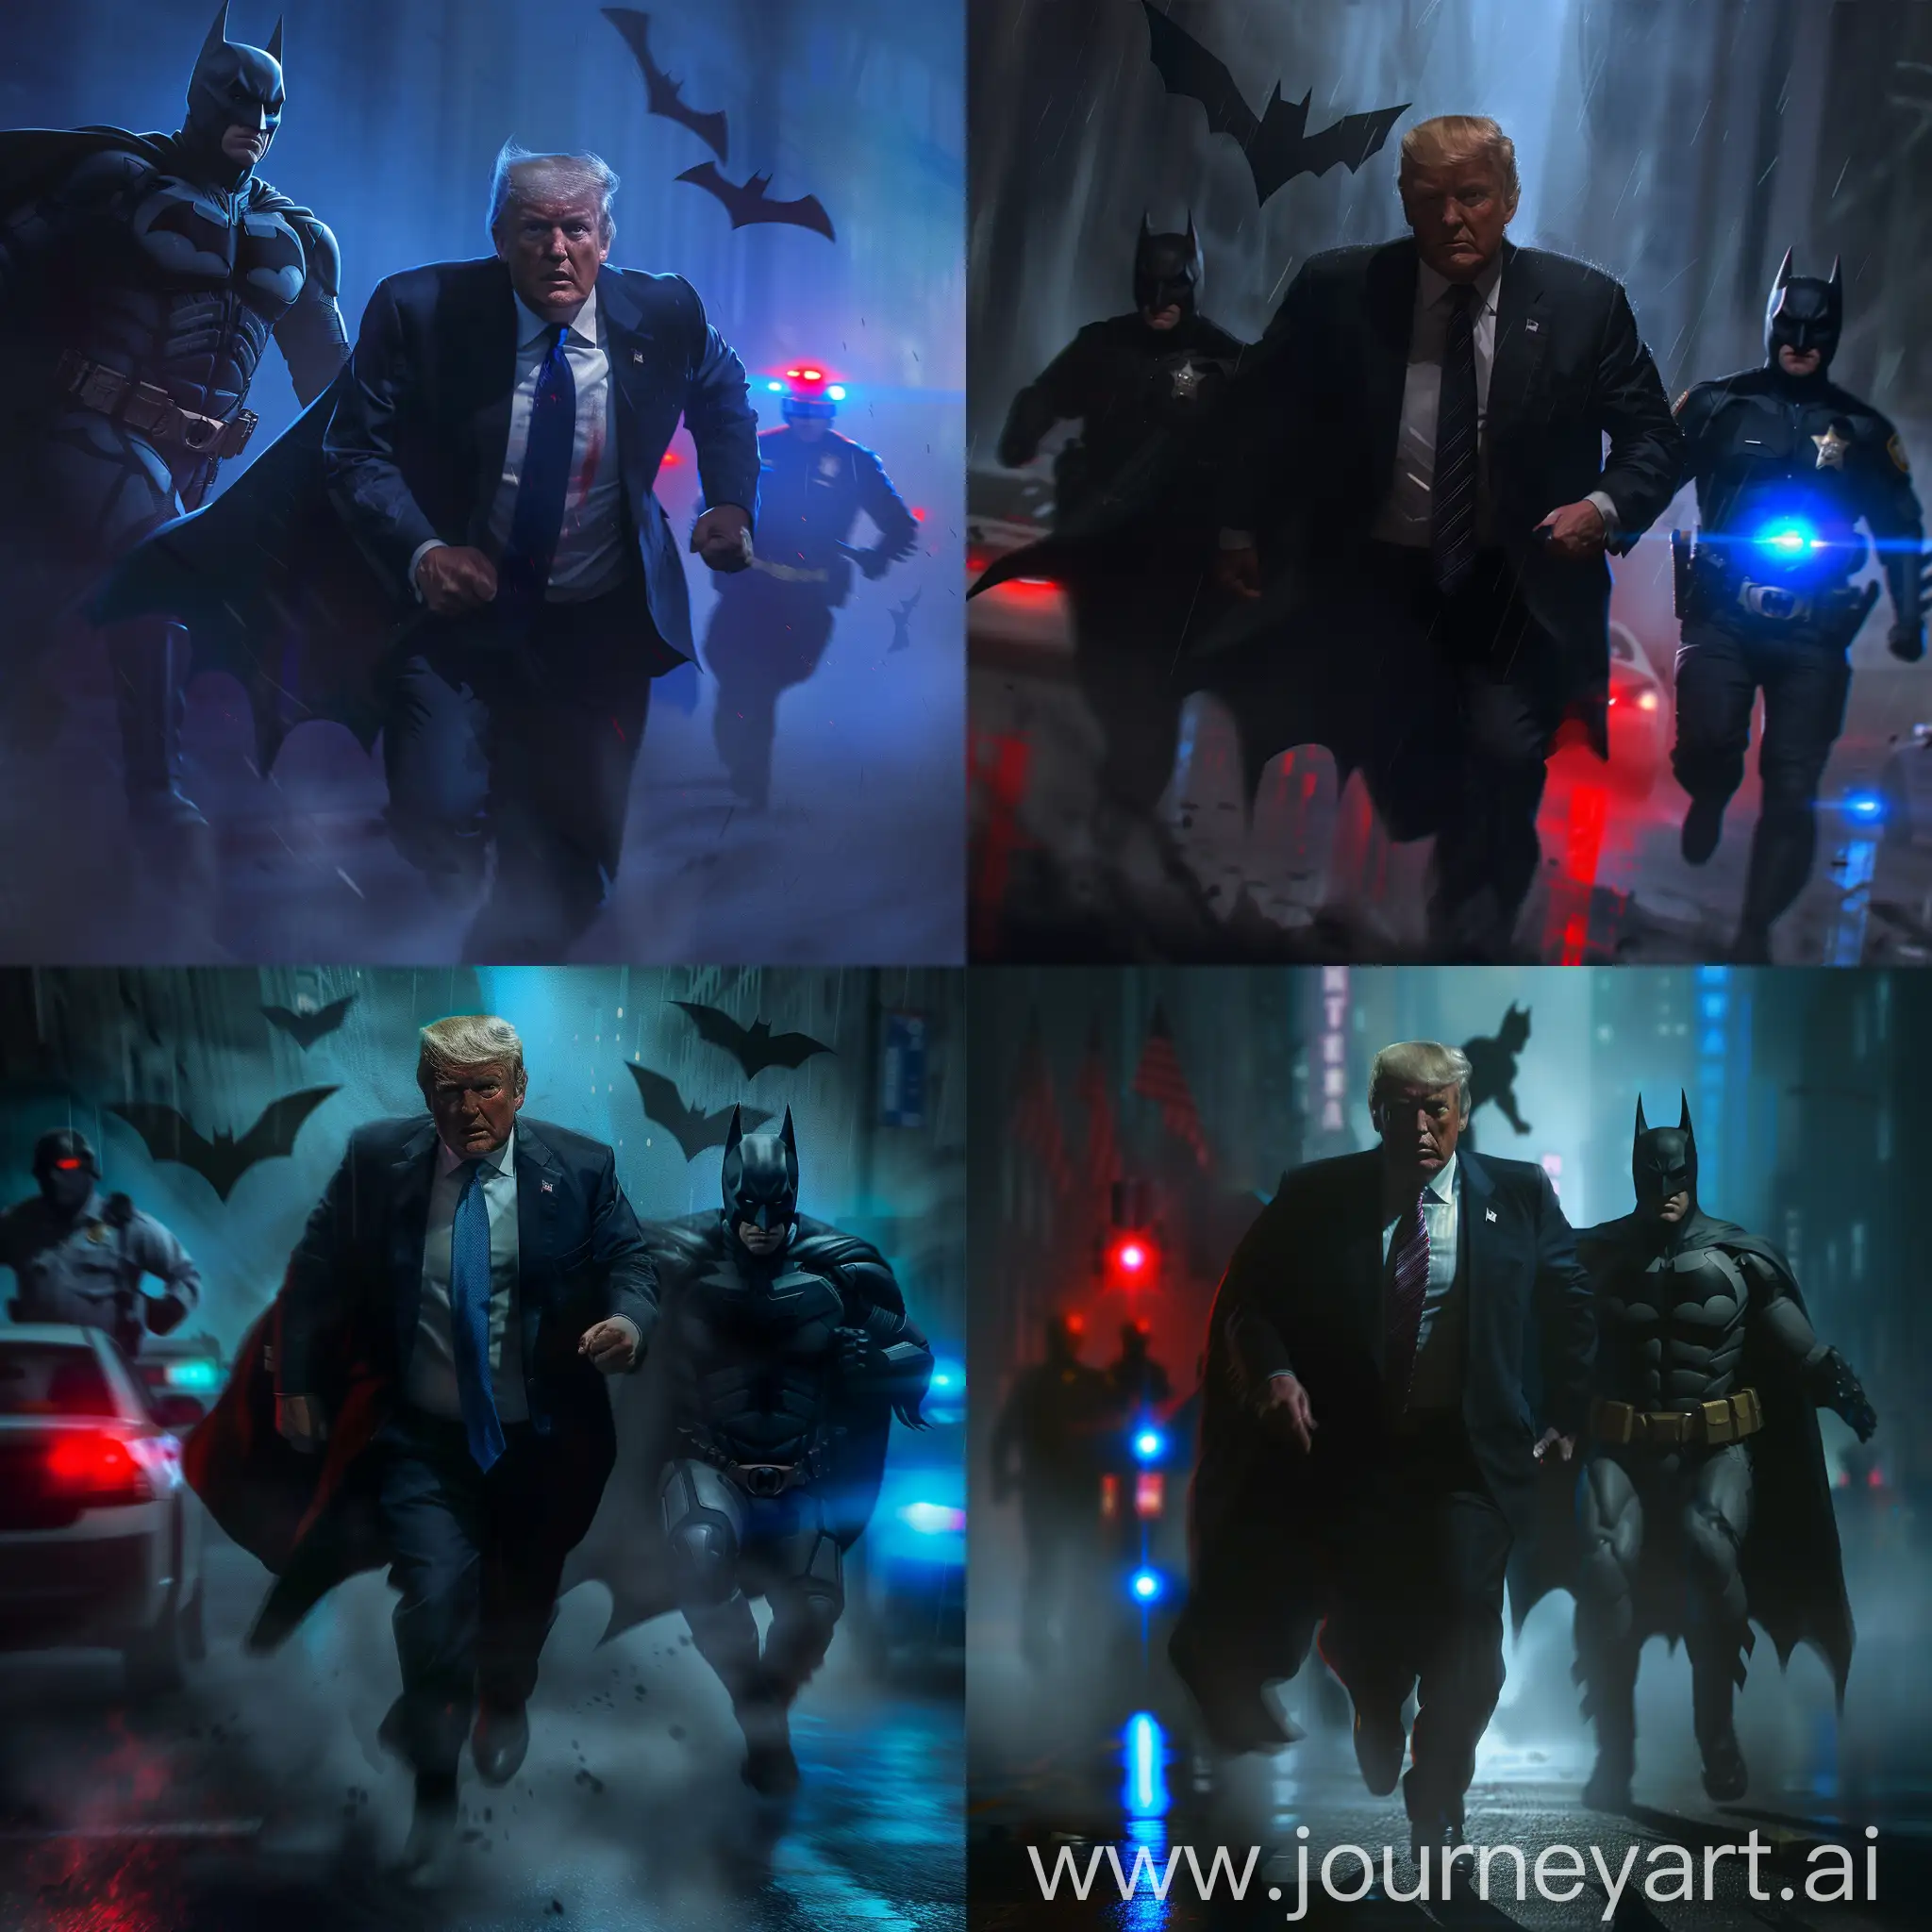 Famous-Politician-and-Entrepreneur-Evading-Police-and-Batman-on-Dark-Foggy-Night